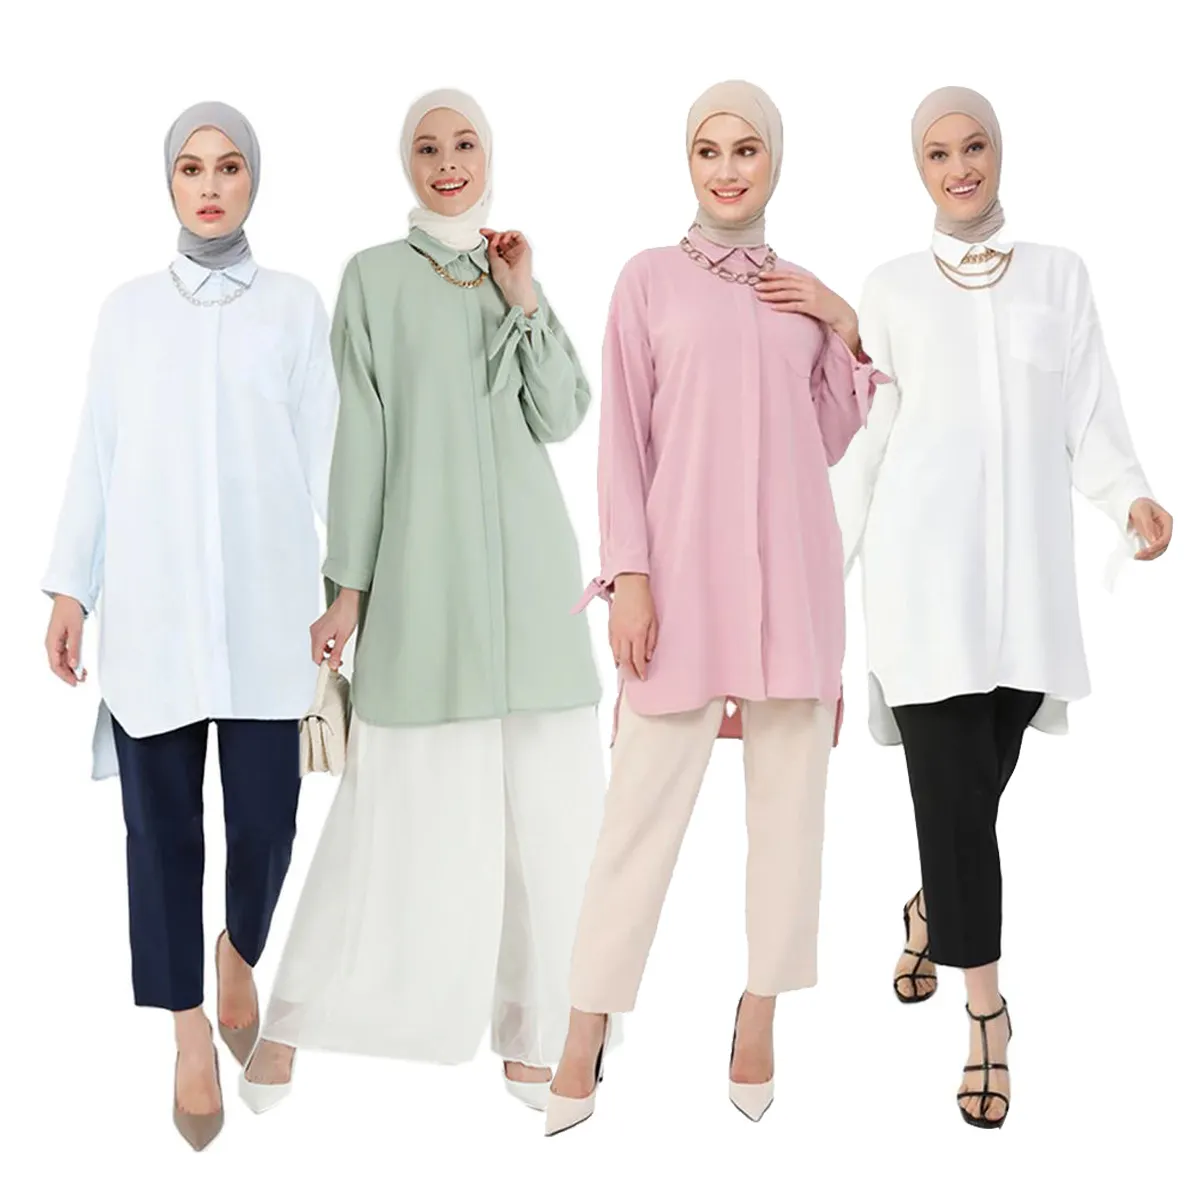 Women Gender Black Embroidered Crepe Long Sleeve Elegant Tops Islamic Abaya Chiffon Pleated Shirt Traditional Muslim Clothing